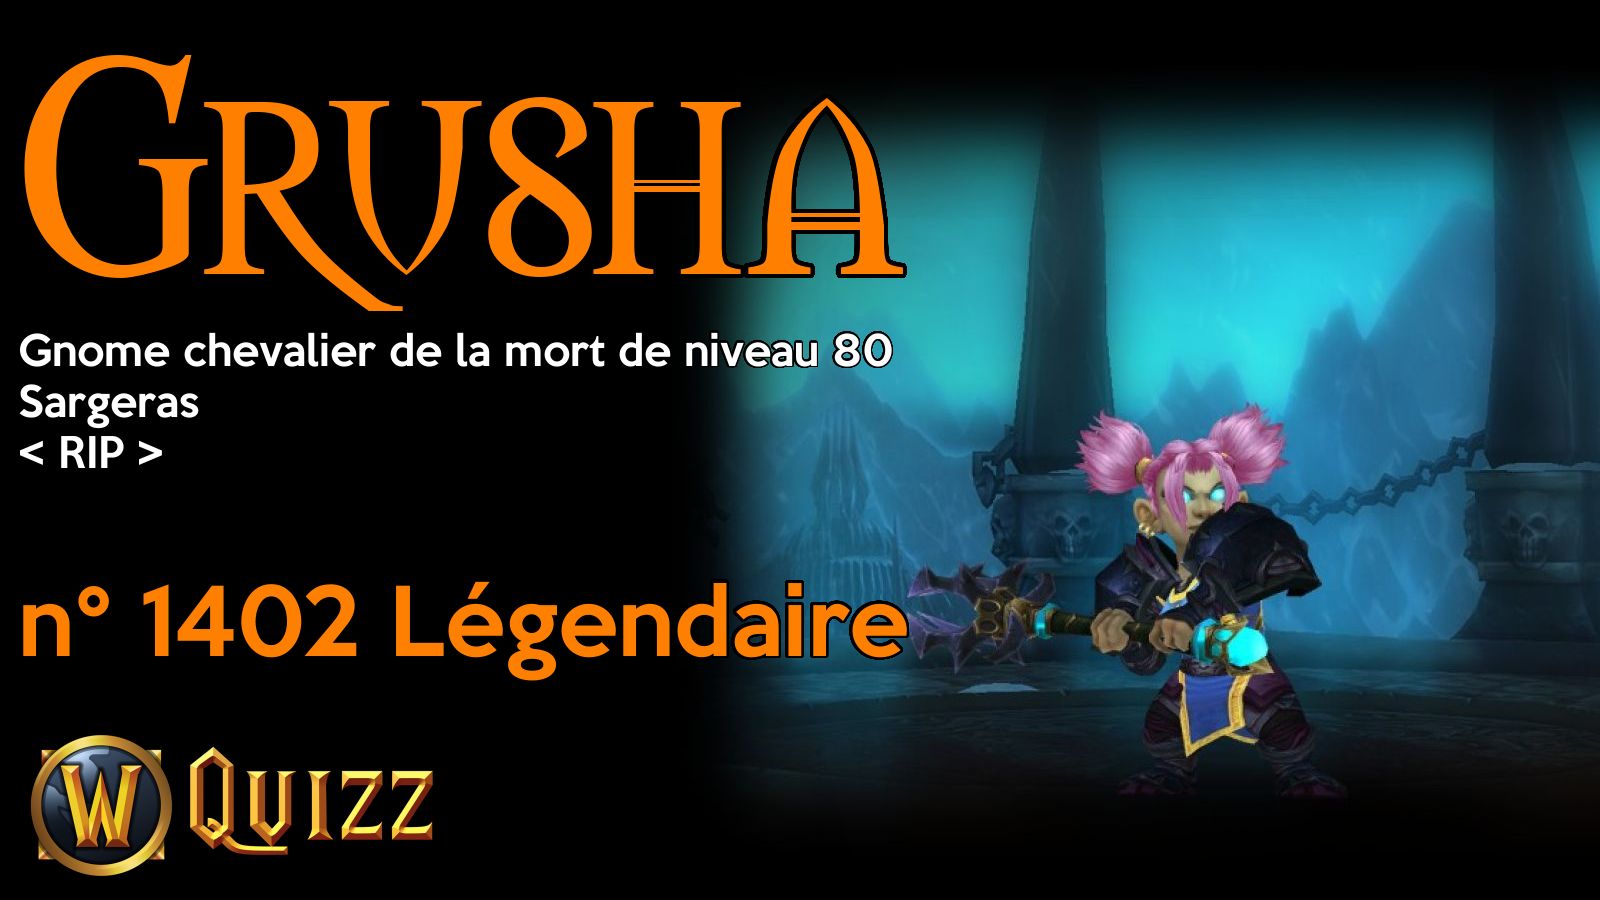 Grusha, Gnome chevalier de la mort de niveau 80, Sargeras